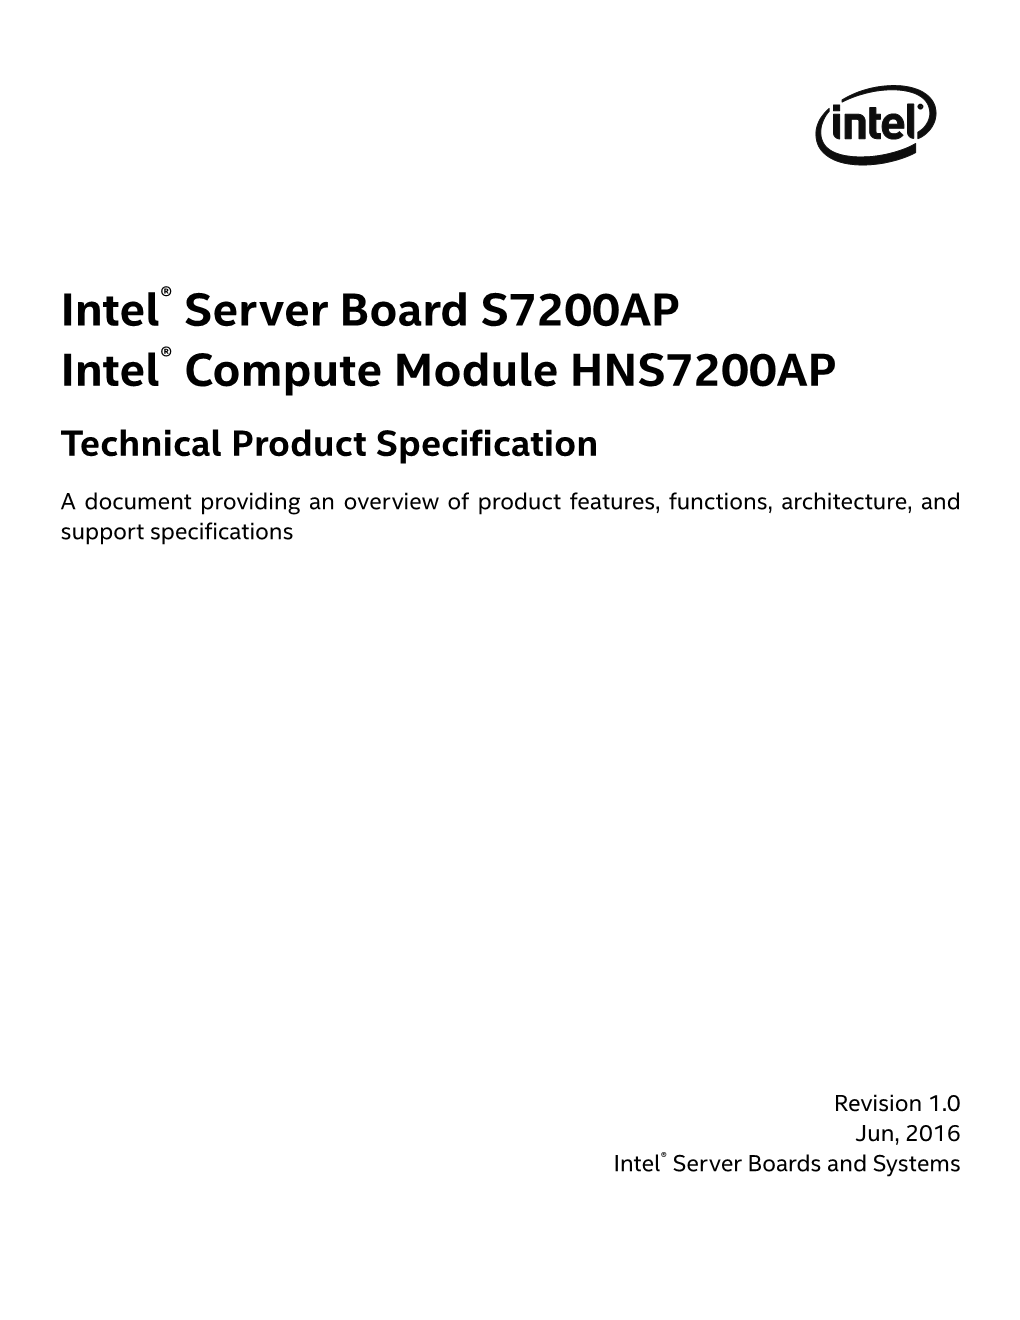 Intel® Server Board S7200AP and Intel® Compute Module HNS7200AP TPS